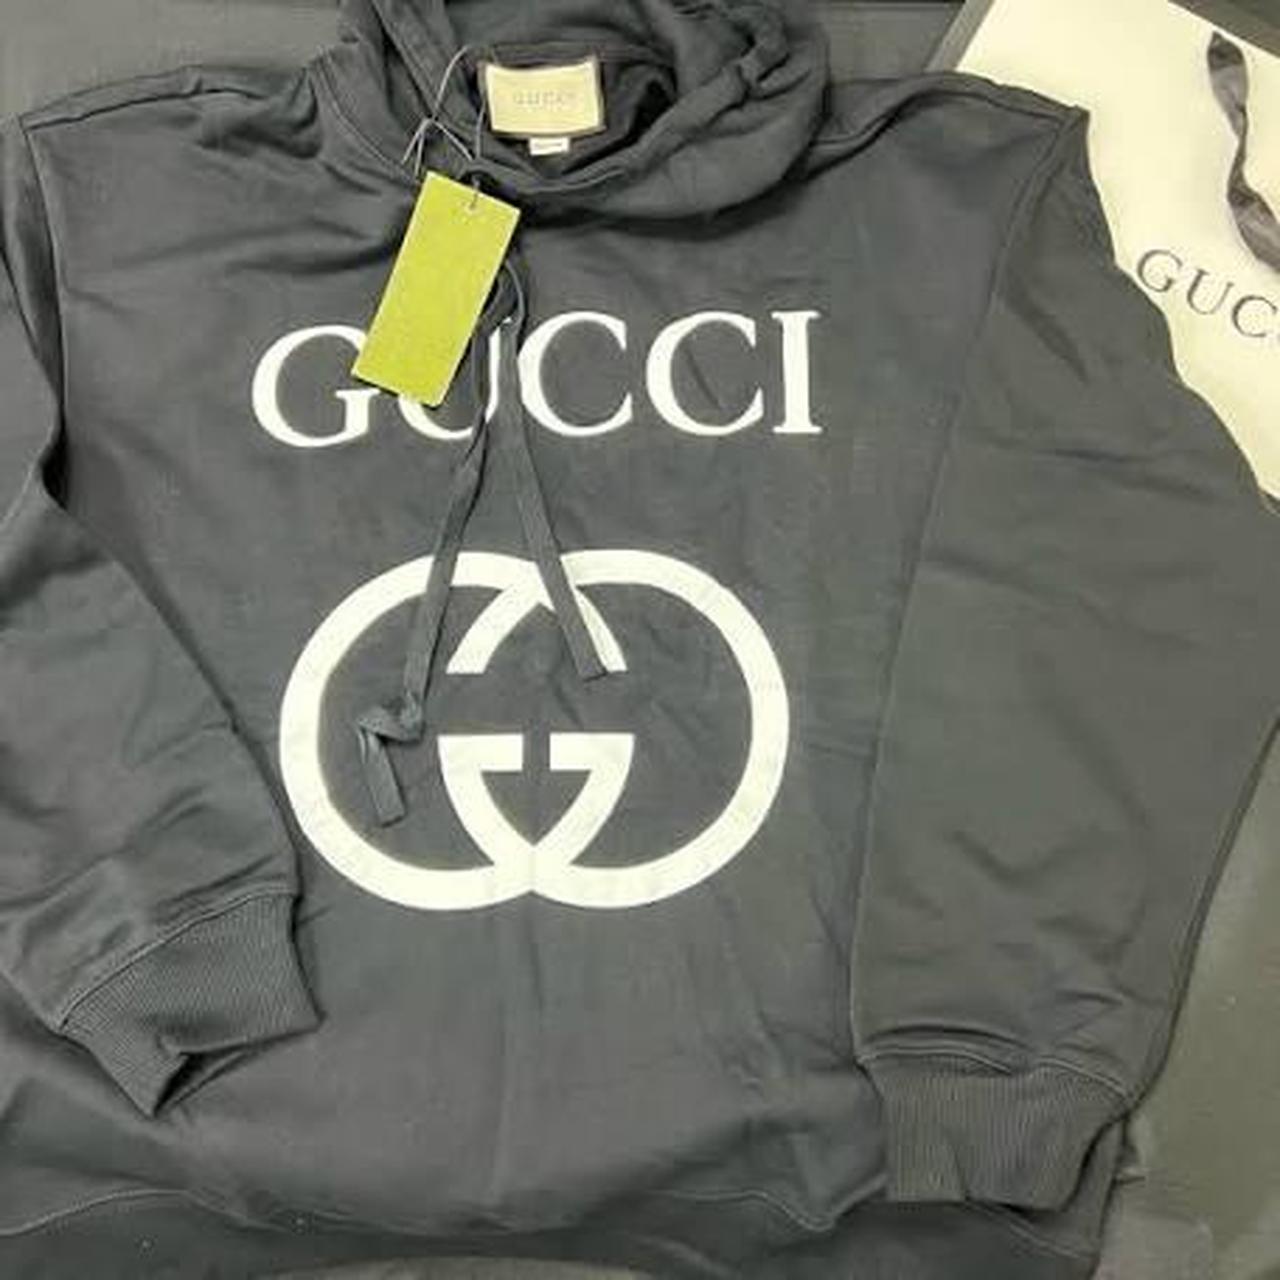 Brand new Gucci hoodie men !! - Depop